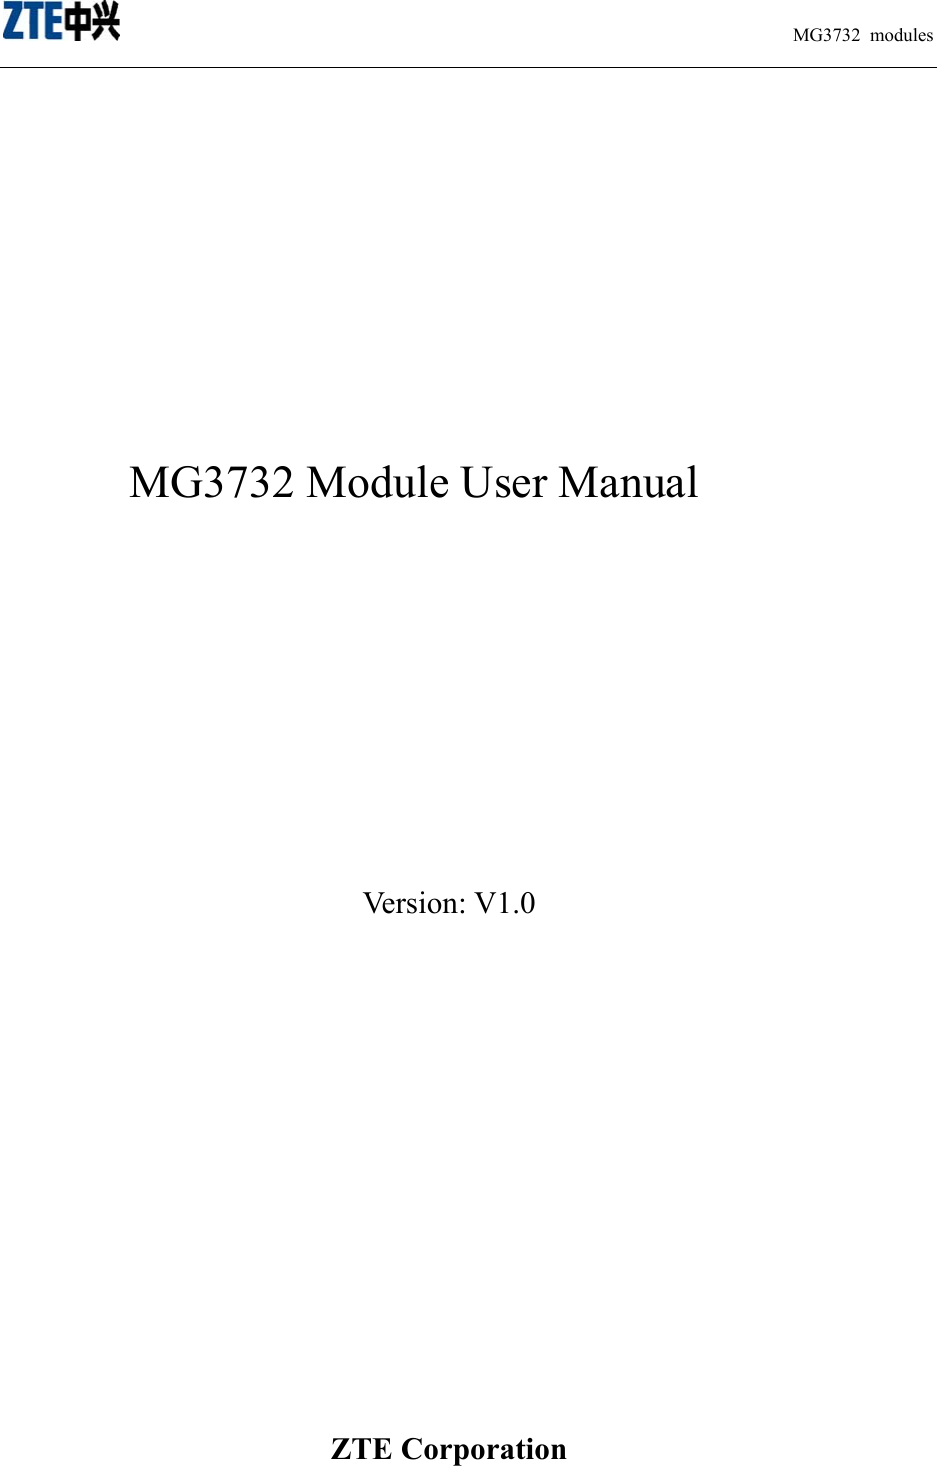                                                                       MG3732 modules      MG3732 Module User Manual      Version: V1.0          ZTE Corporation  